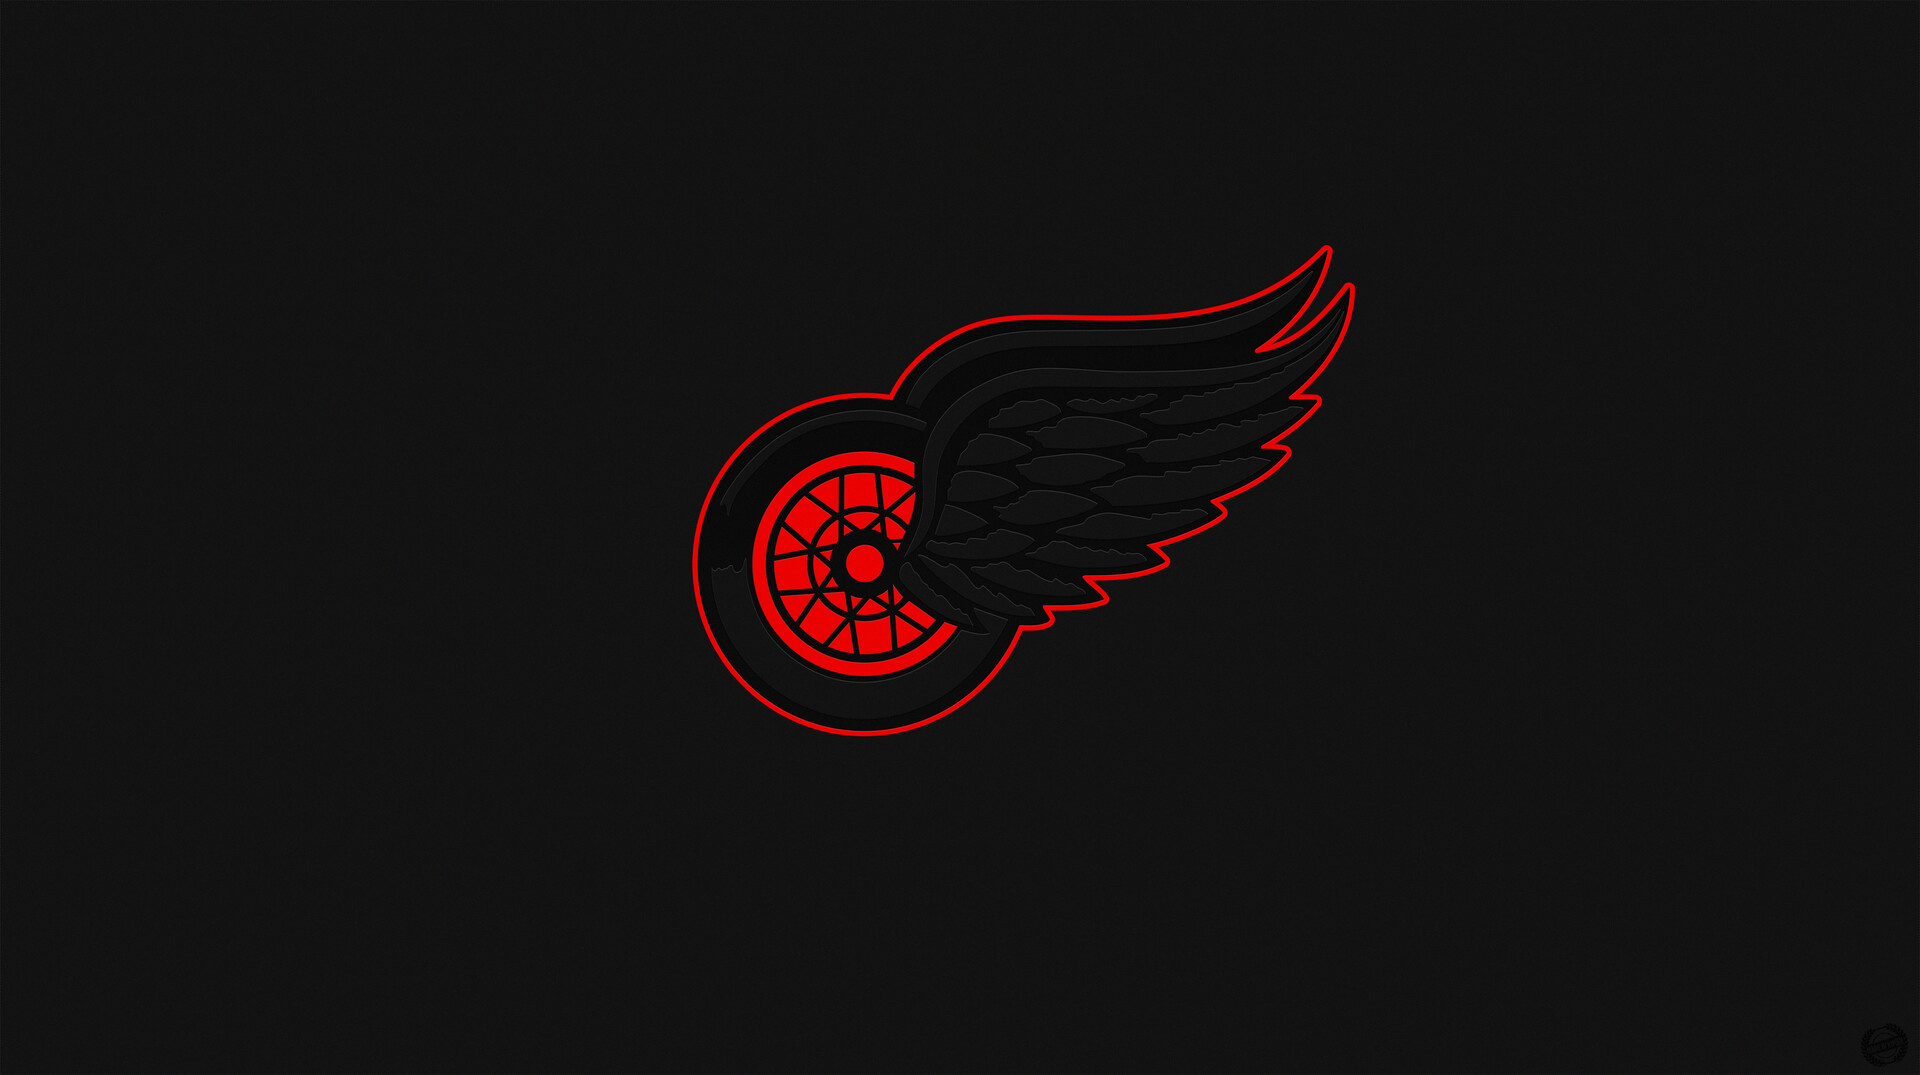 ArtStation - Detroit Red Wings Background